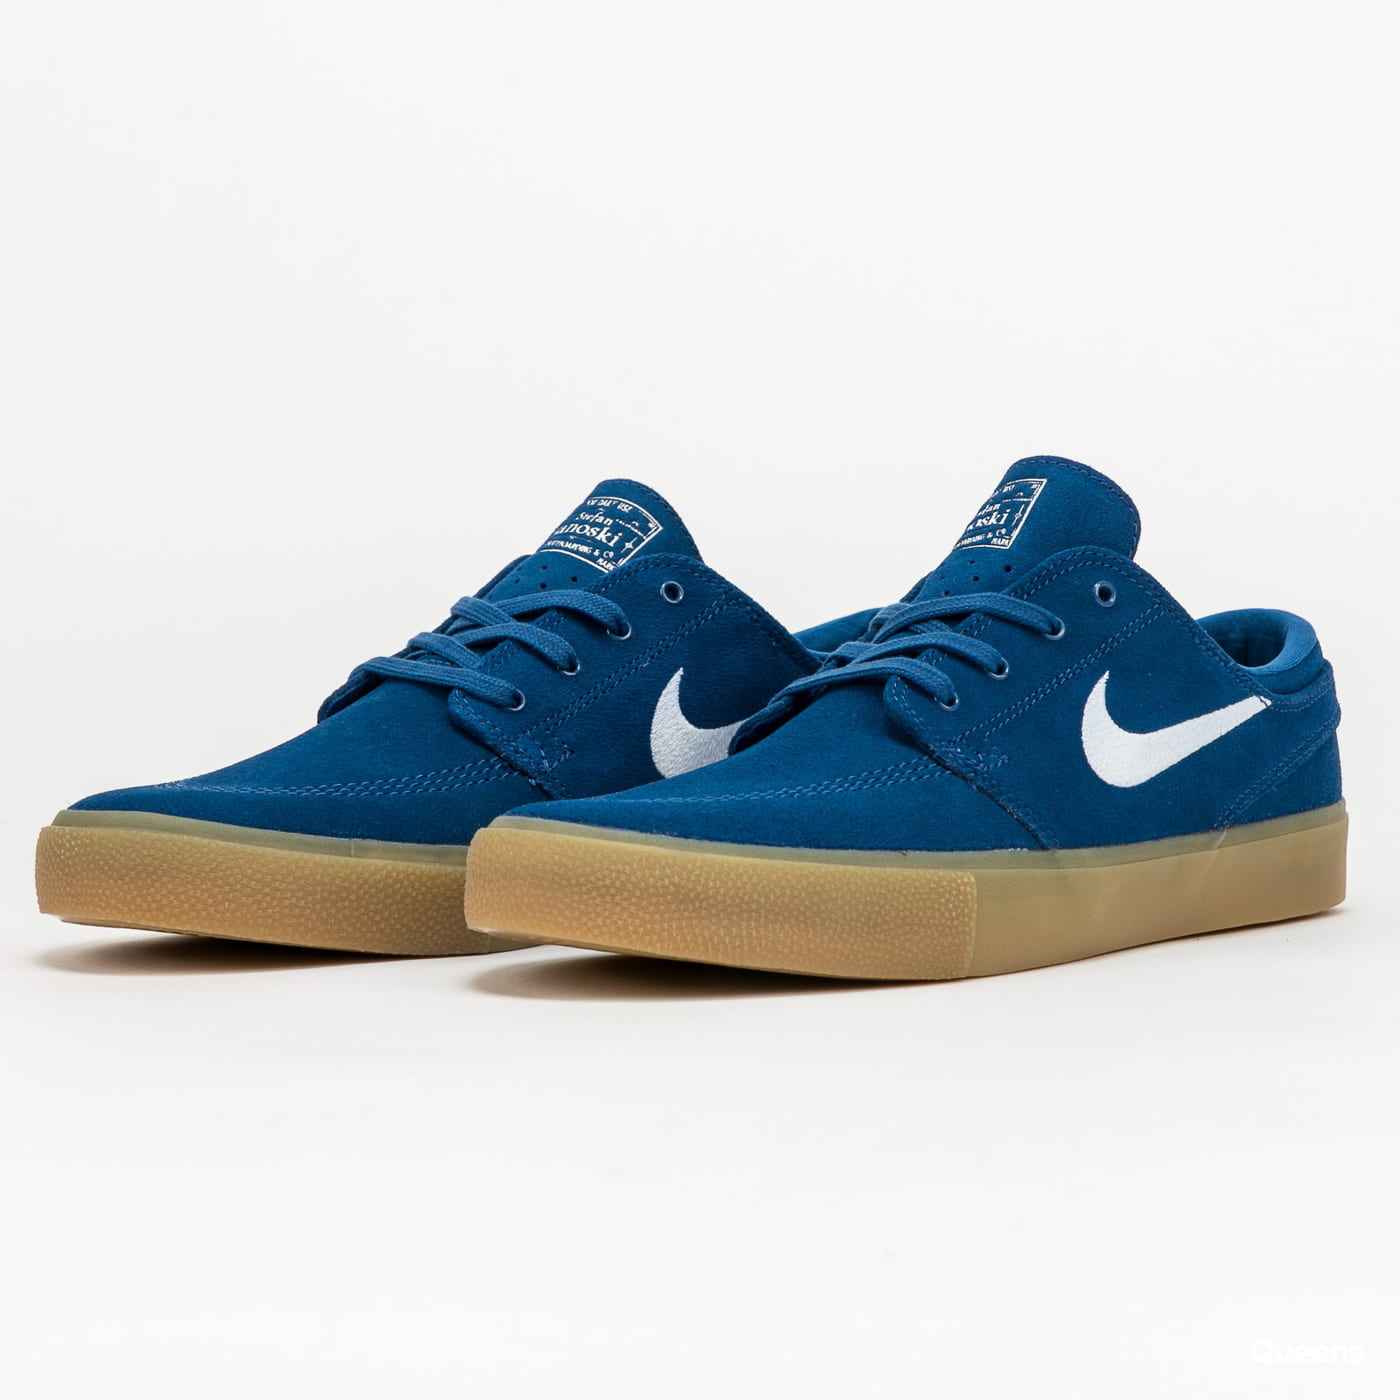 Nike SB Zoom Janoski RM Shoes - Court Blue/White-Gum | Skate & Snow